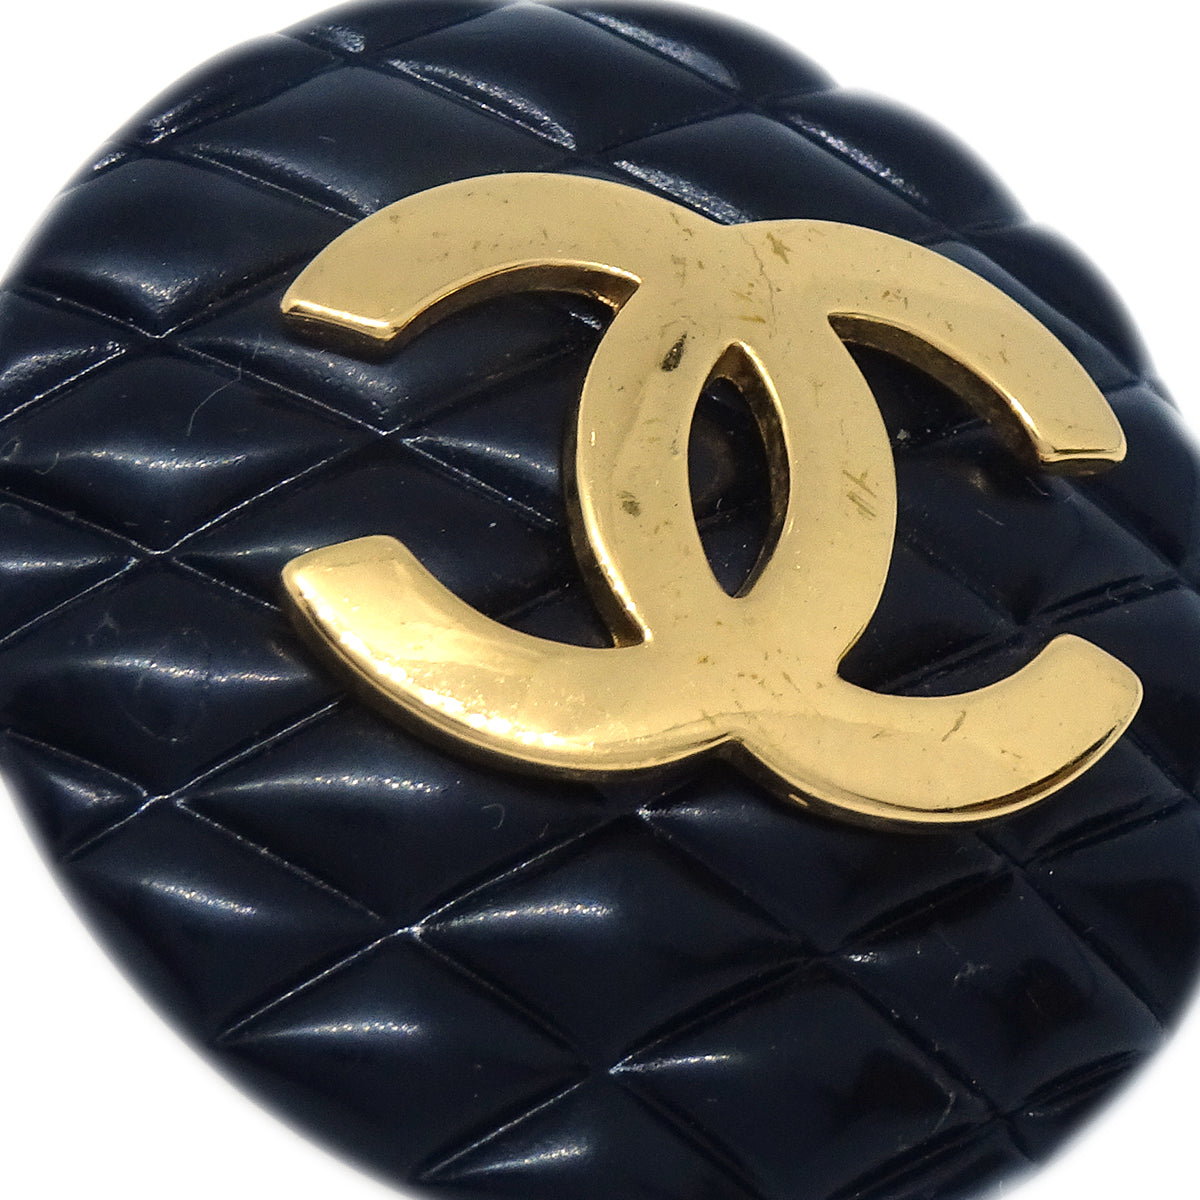 Chanel 1993 Earrings Clip-On Gold Black